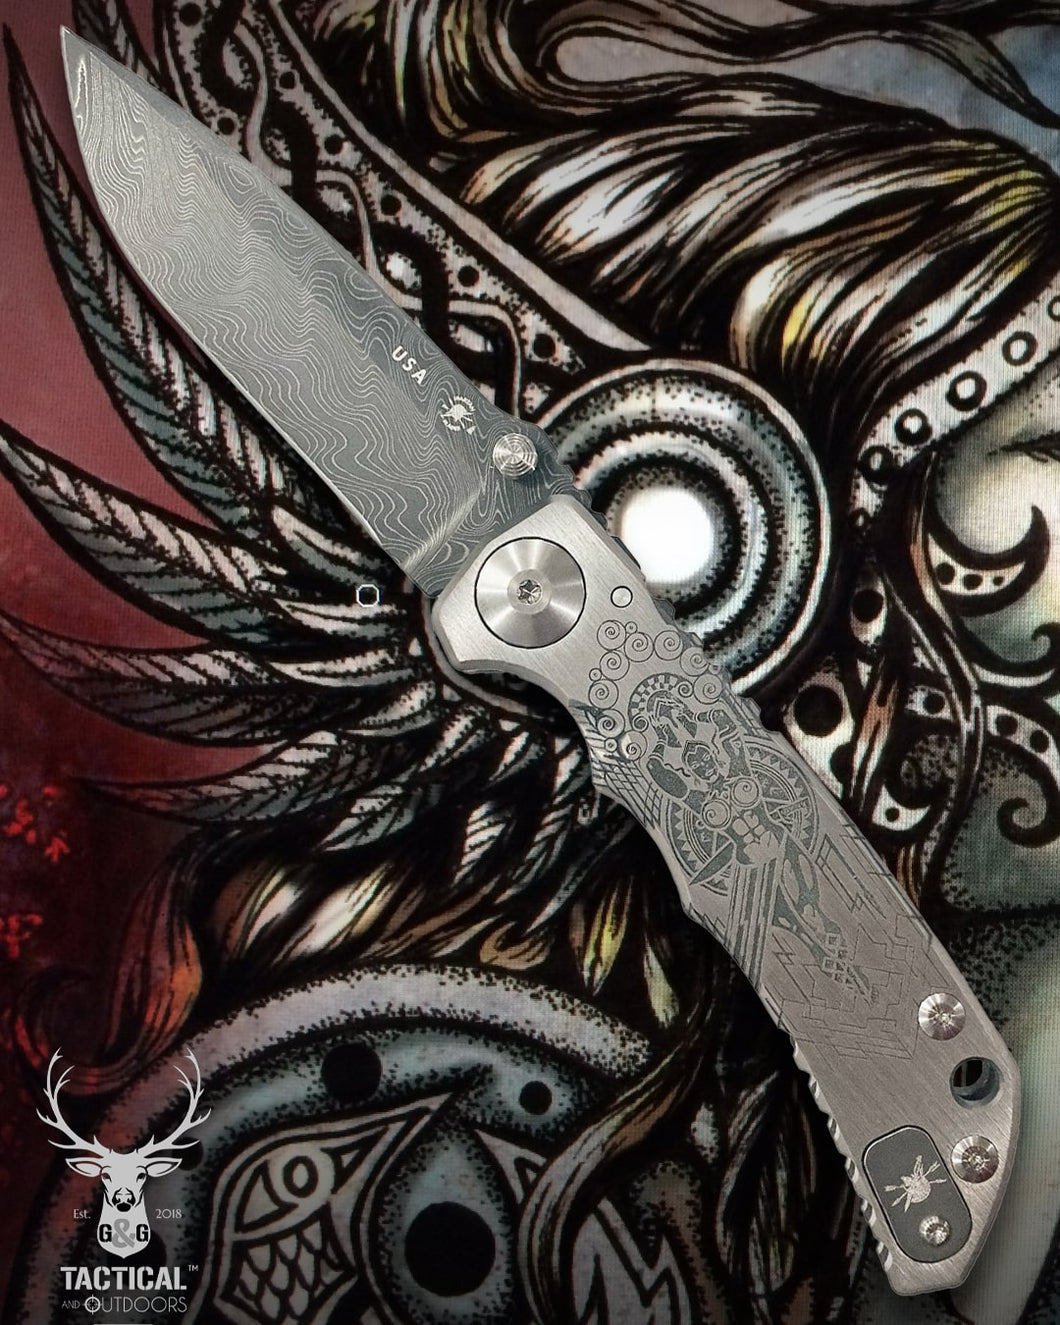 Spartan Blades Harsey Folder - Valkryie Theme, Chad Nichols Damascus Blade, Satin Hardware Knife